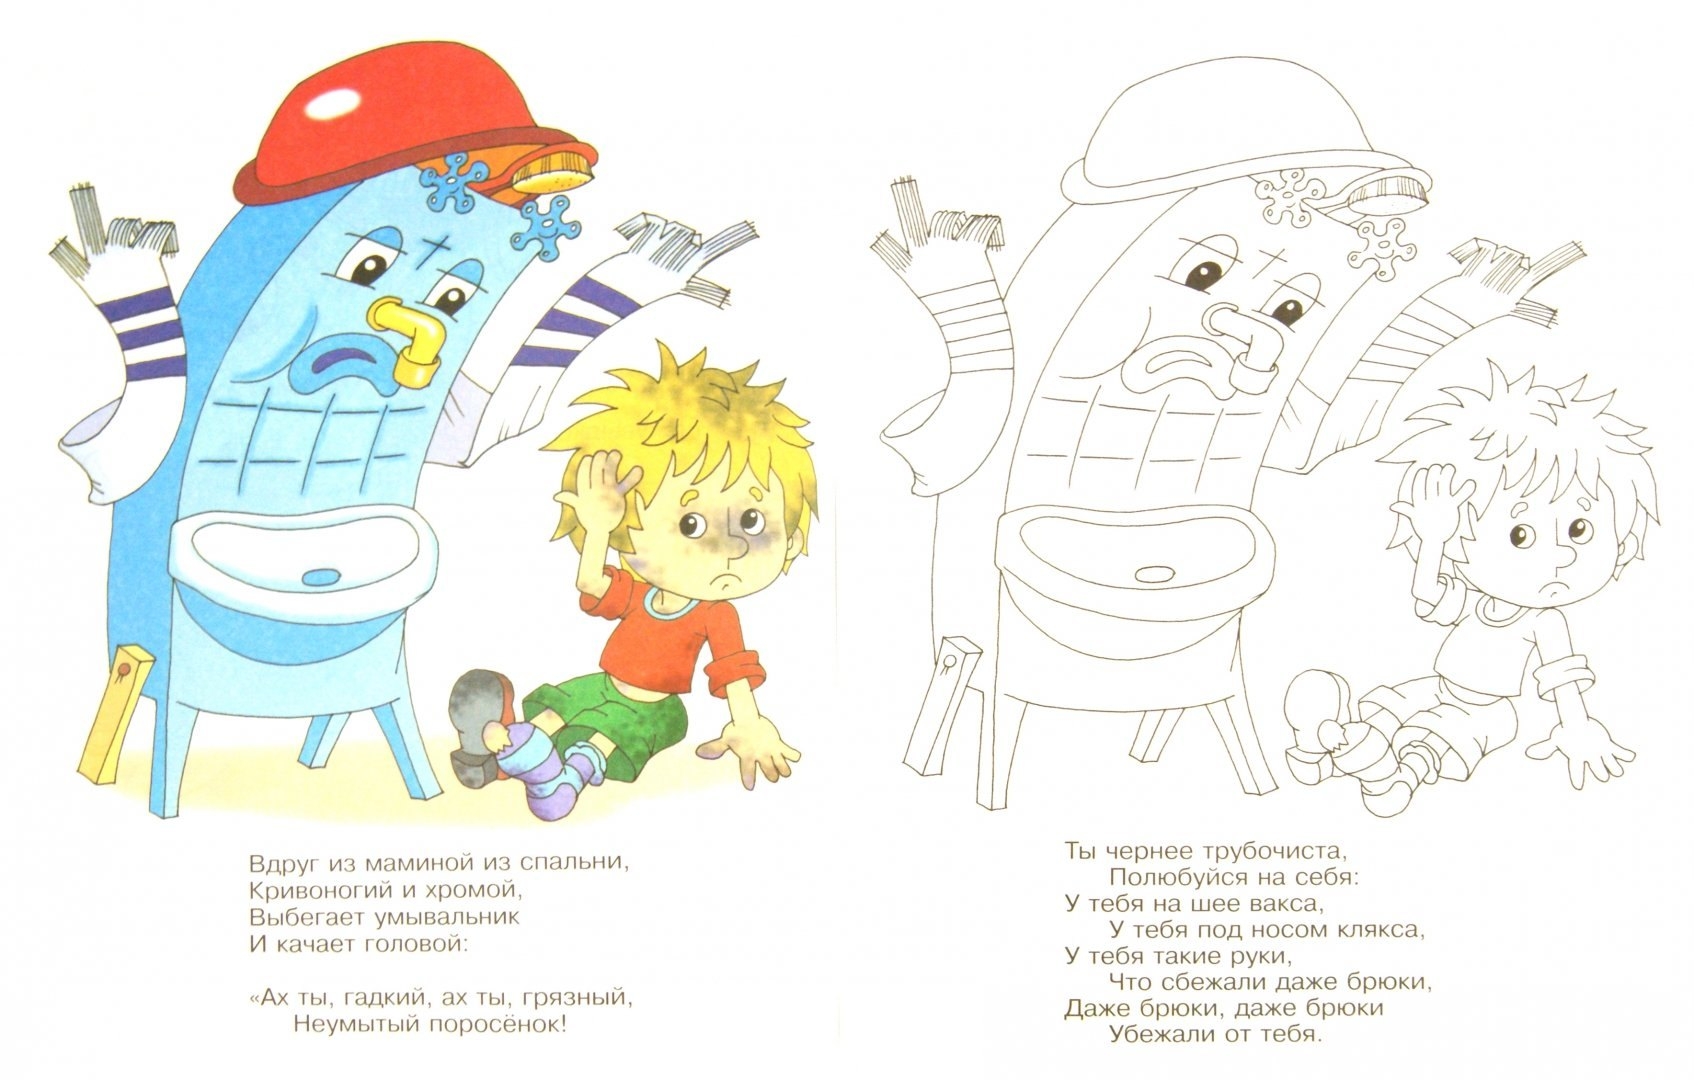 Color-frenzy moidodyr раскраска для детей 3-4 лет